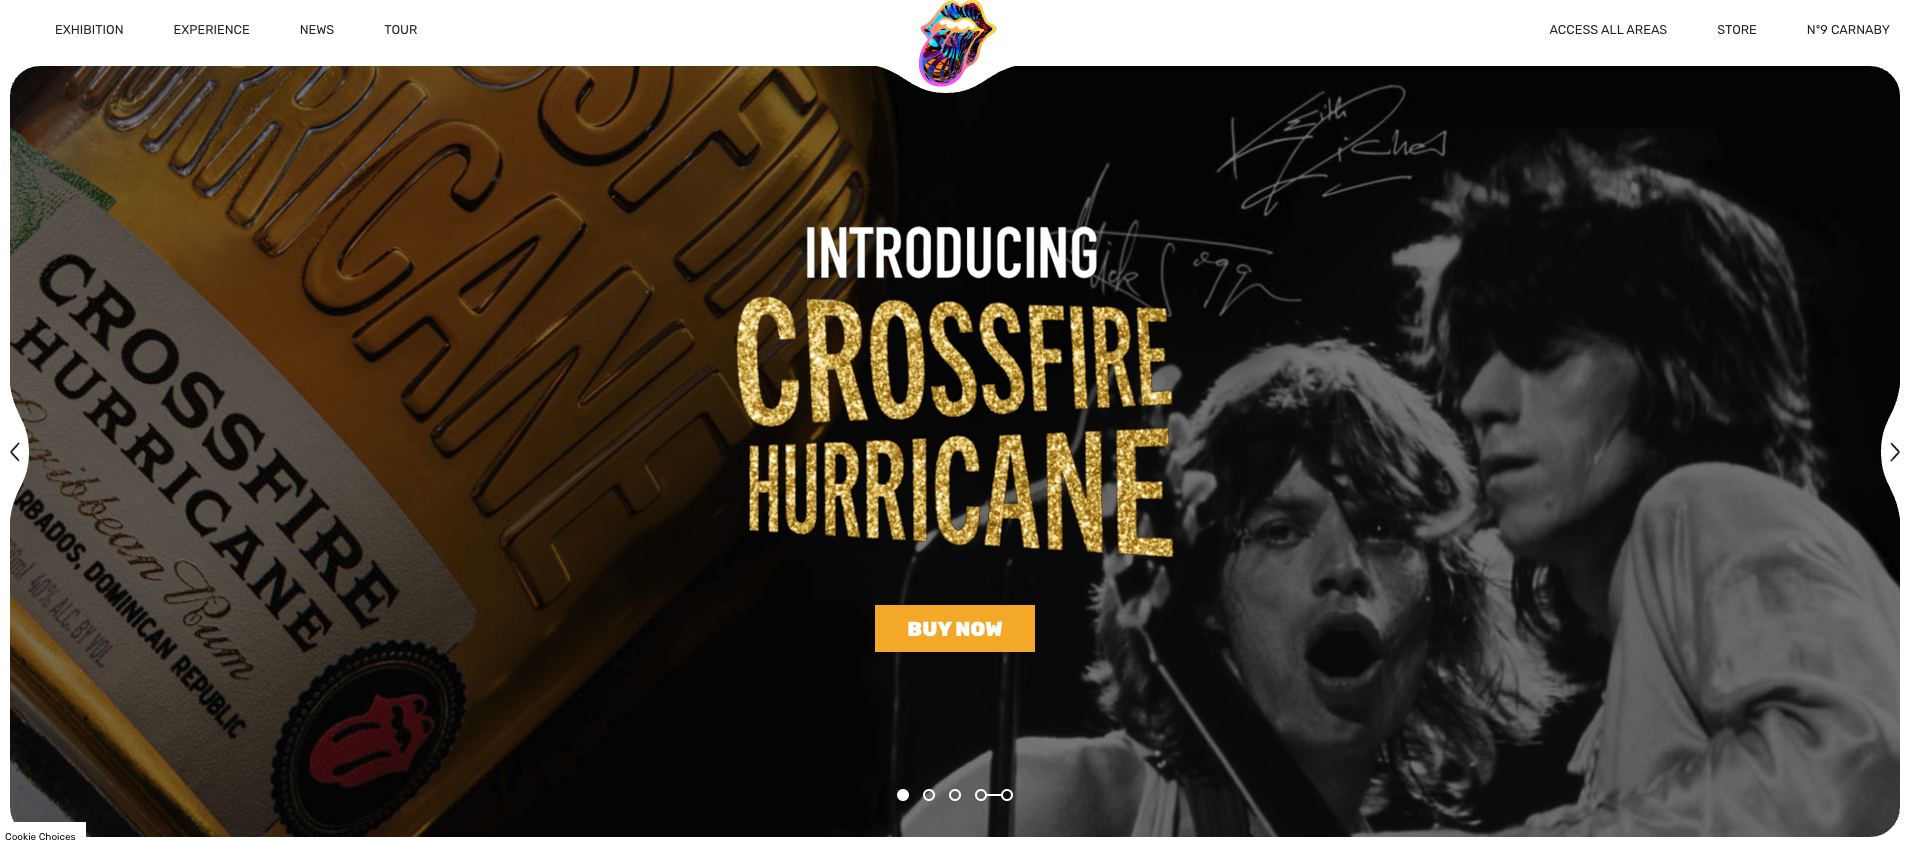 Rolling Stones Homepage